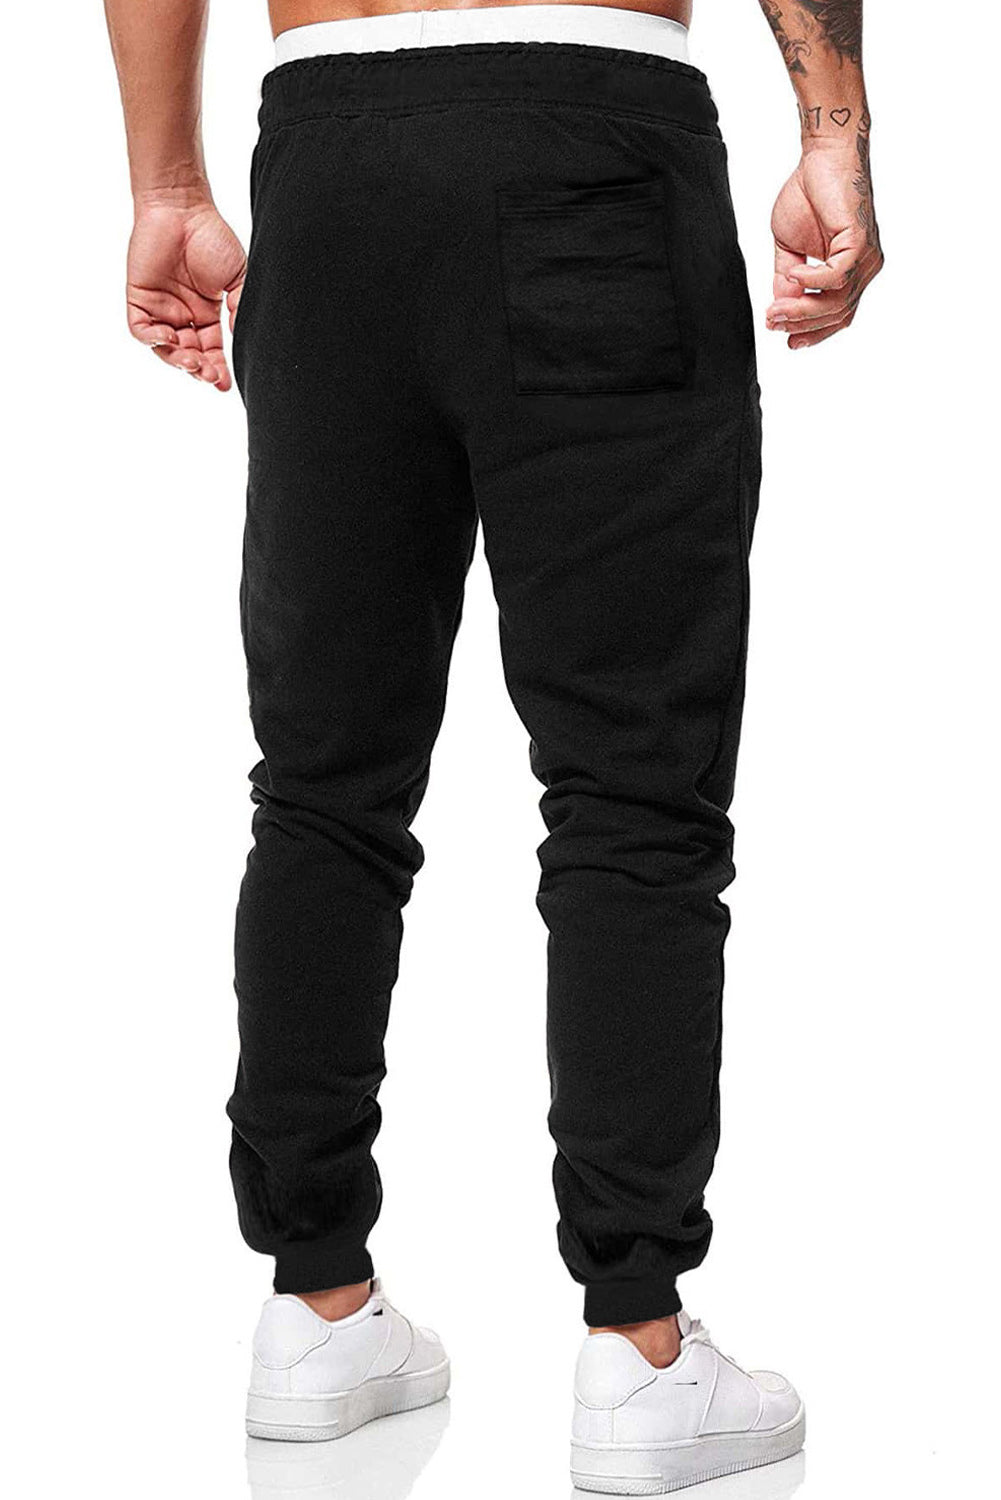 Black ROUTE 66 Graphic Print Drawstring Men's Pants Men's Pants JT's Designer Fashion